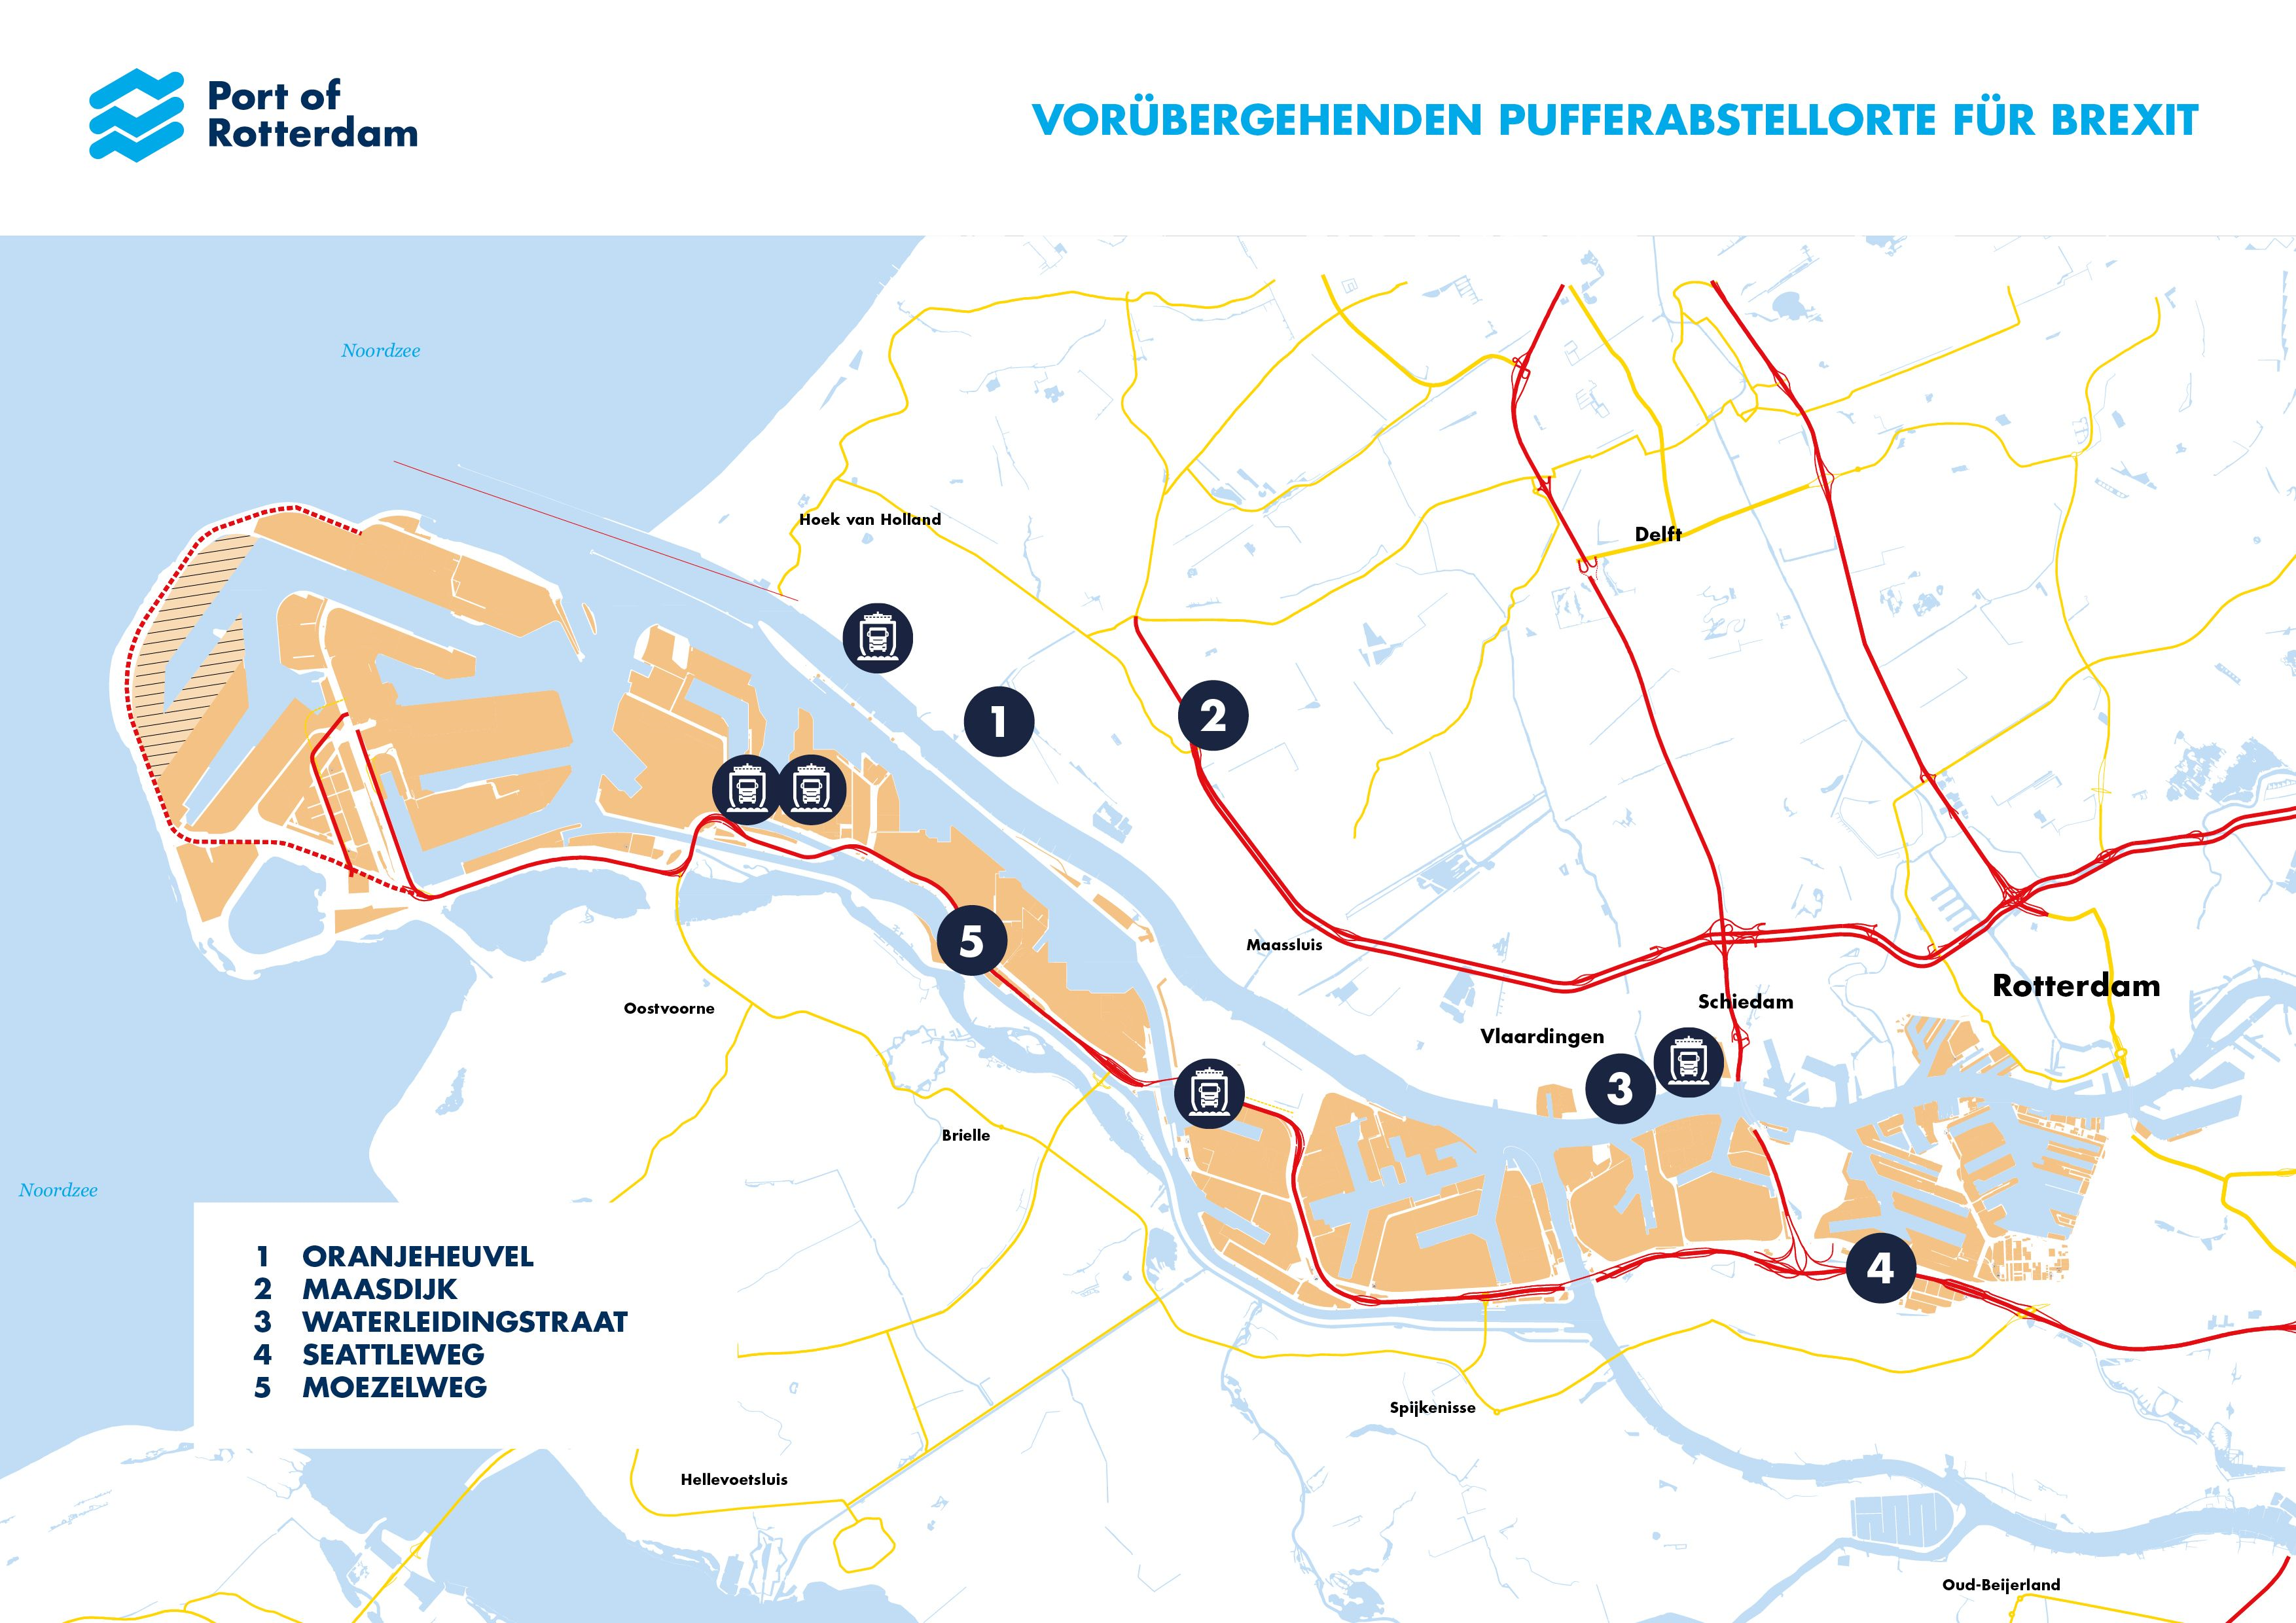 Port of Rotterdam: truck buffer zones for “hard Brexit”